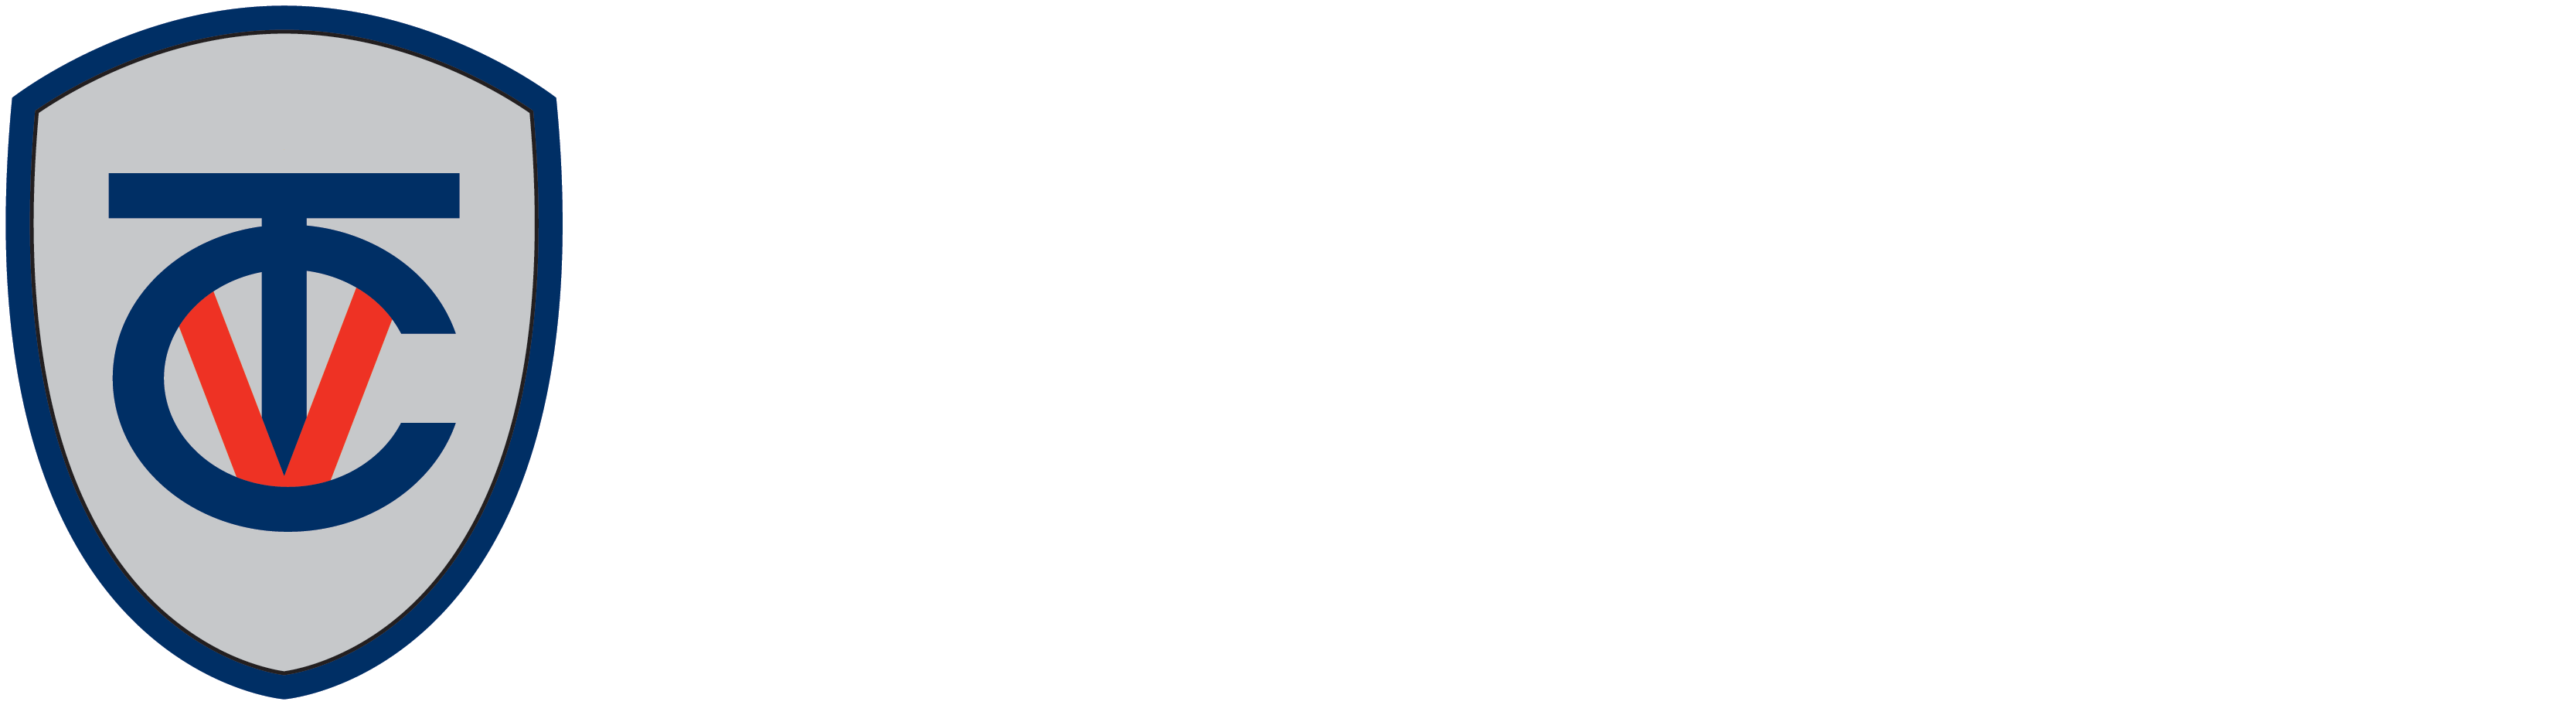 1701-tecvalco-logo-2017-horizontal-spot-colour-rev.png